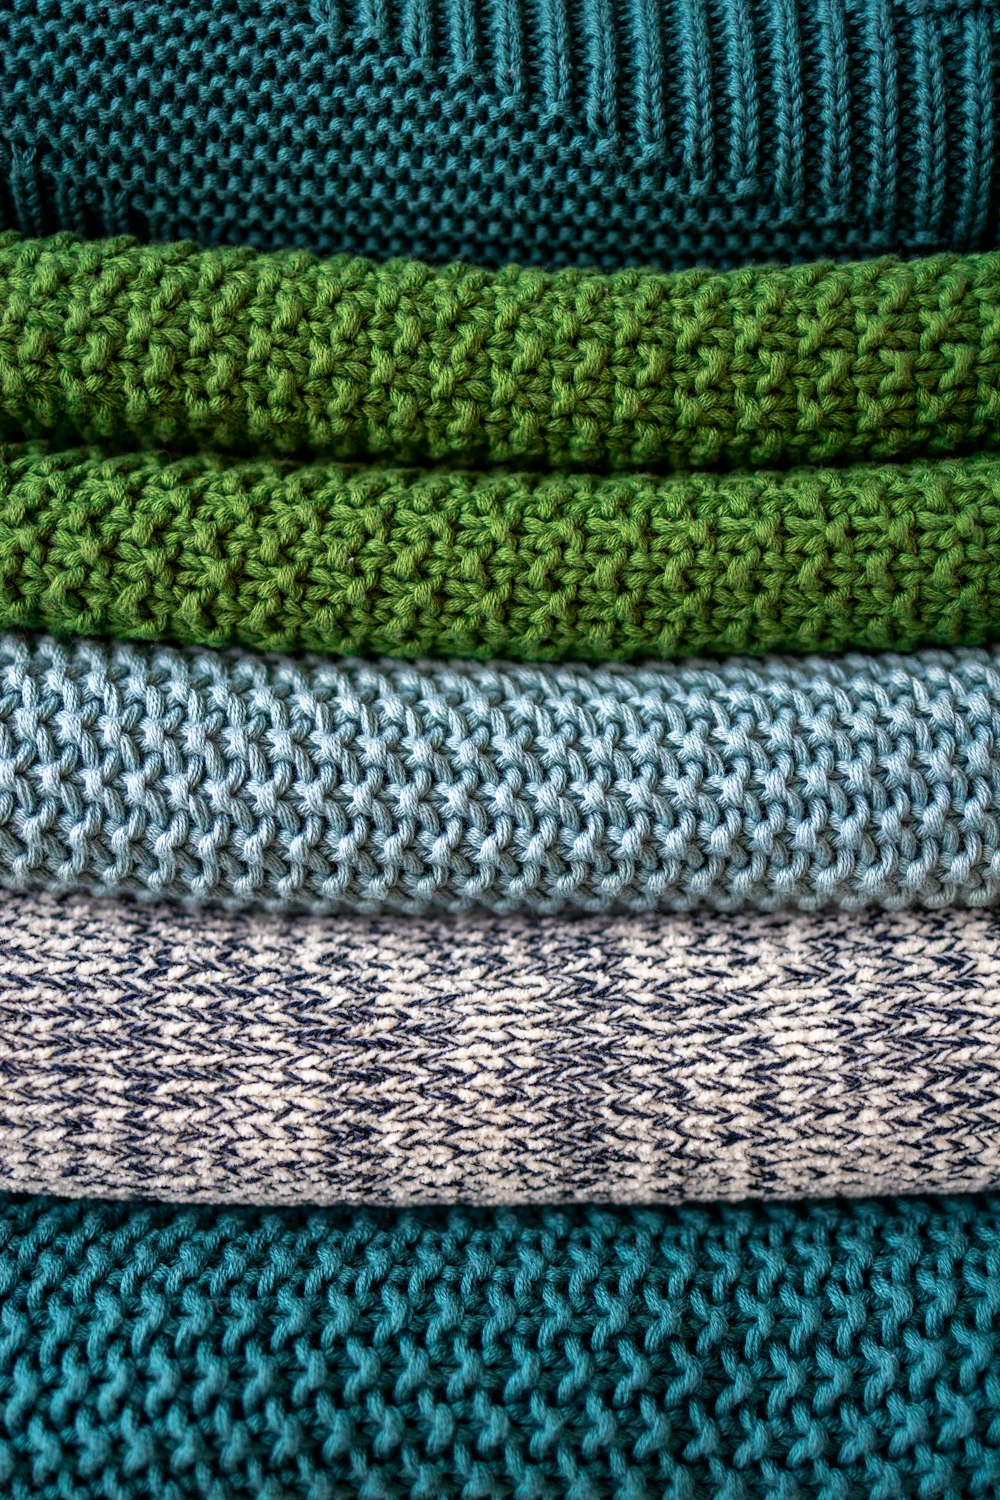 Textil a rayas verdes y blancas